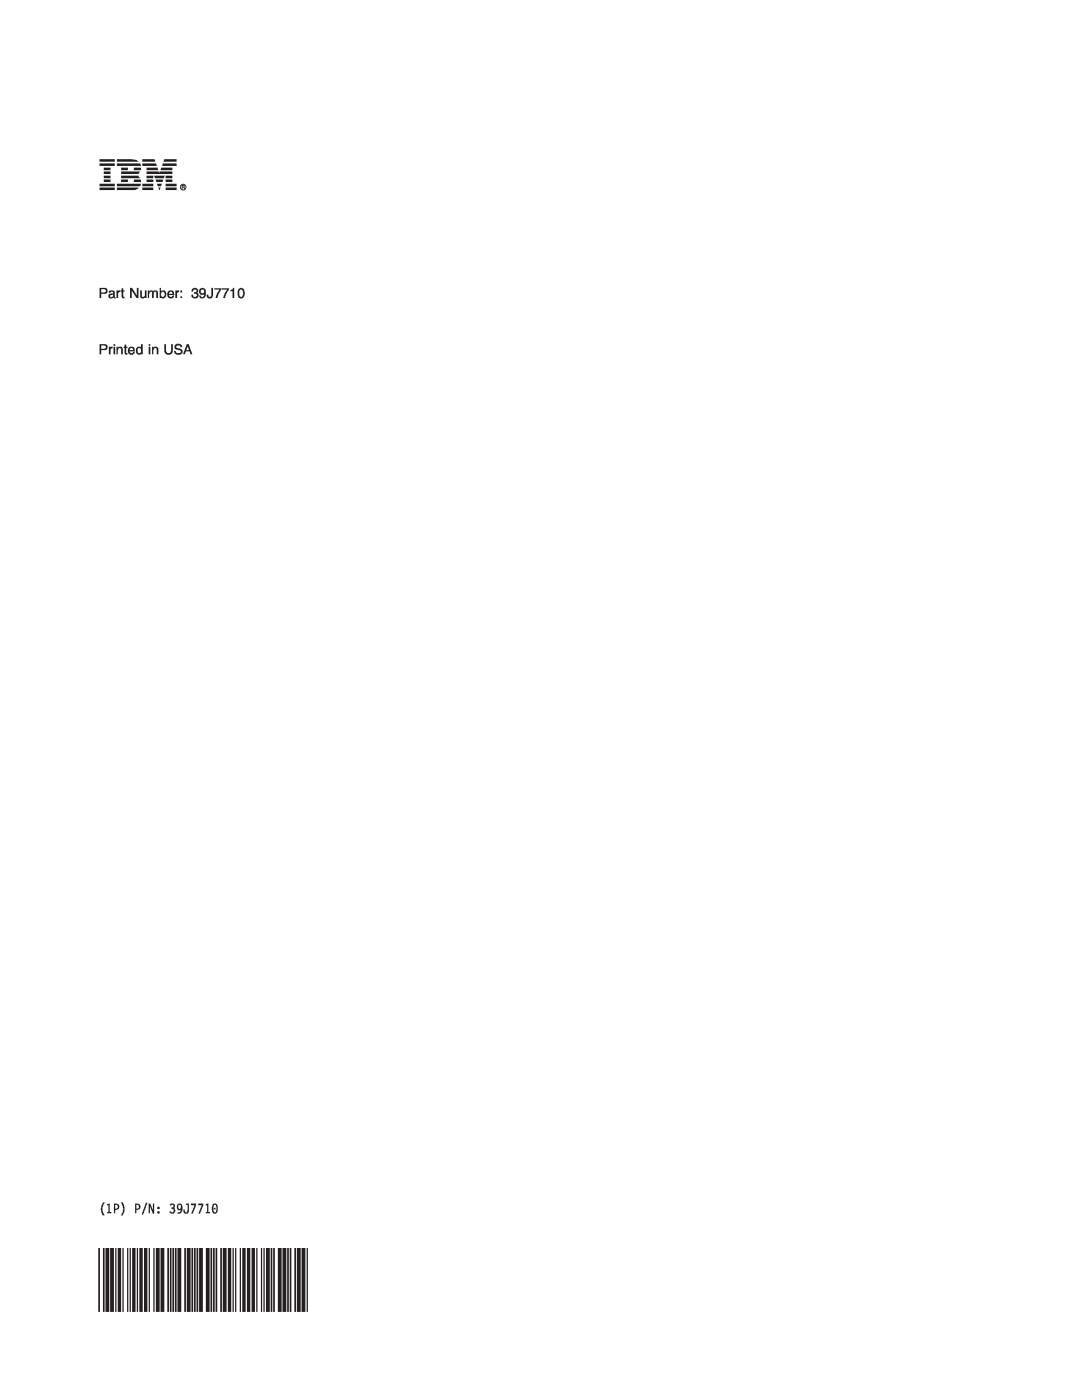 IBM Partner Pavilion 8122, 8138, 8137, 8131, 8124, 8123 manual Part Number 39J7710 Printed in USA, 1P P/N 39J7710 